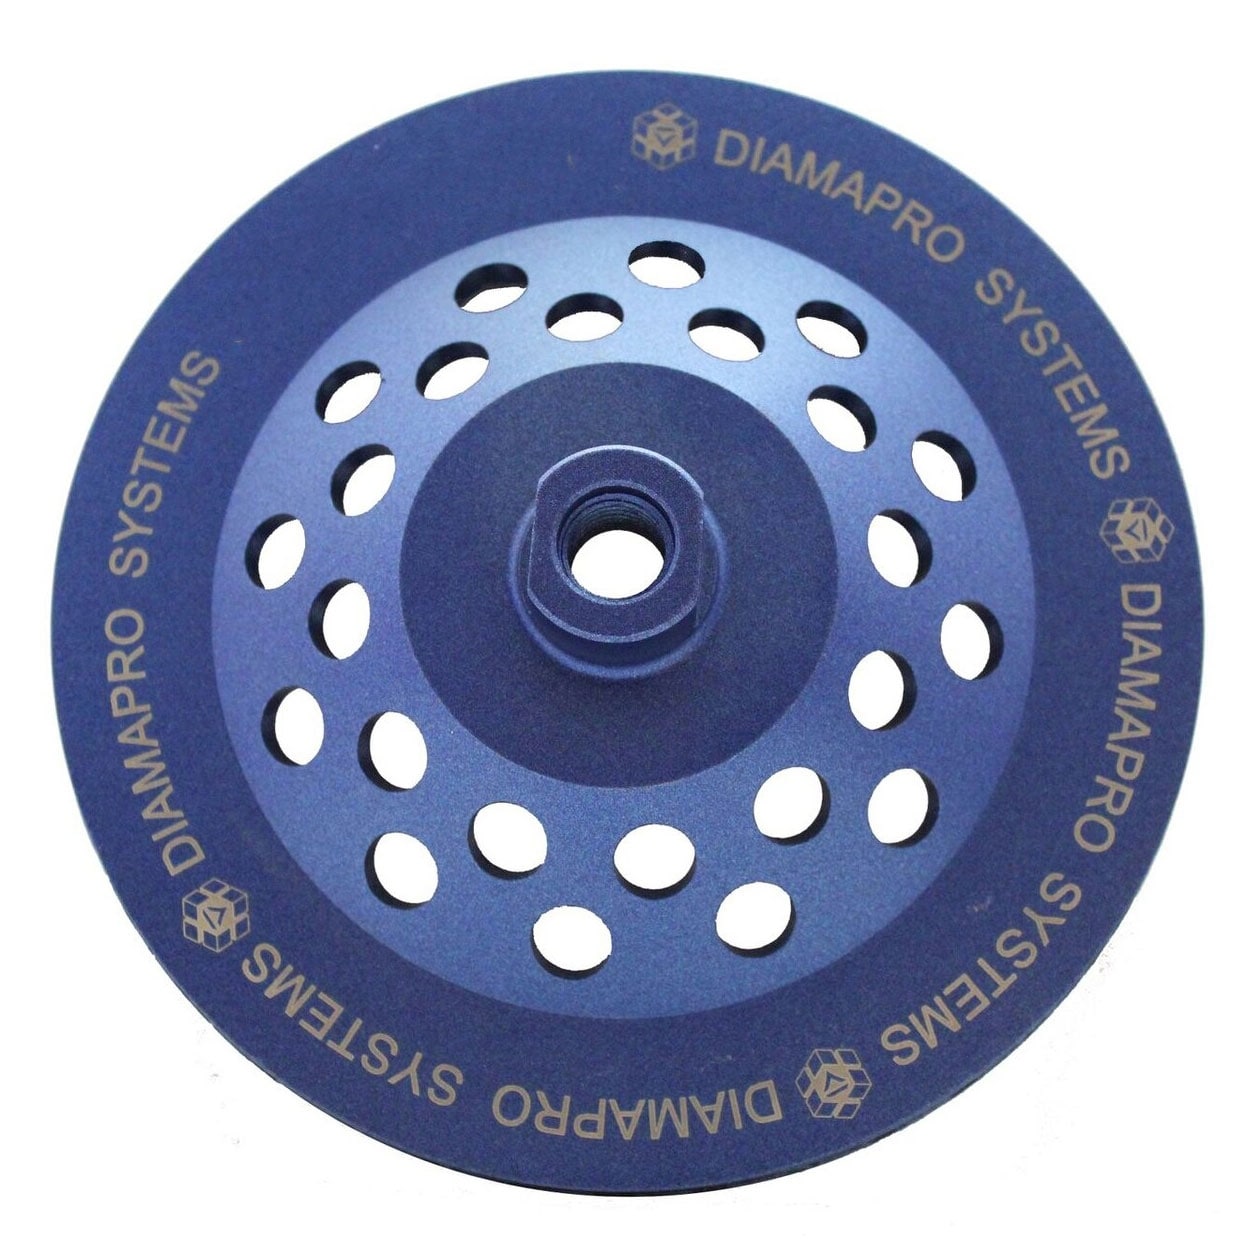 DiamaPro Systems 7 Inch Continuous Rim Turbo Concrete Grinding Cup Wheel, Fine - 2.85